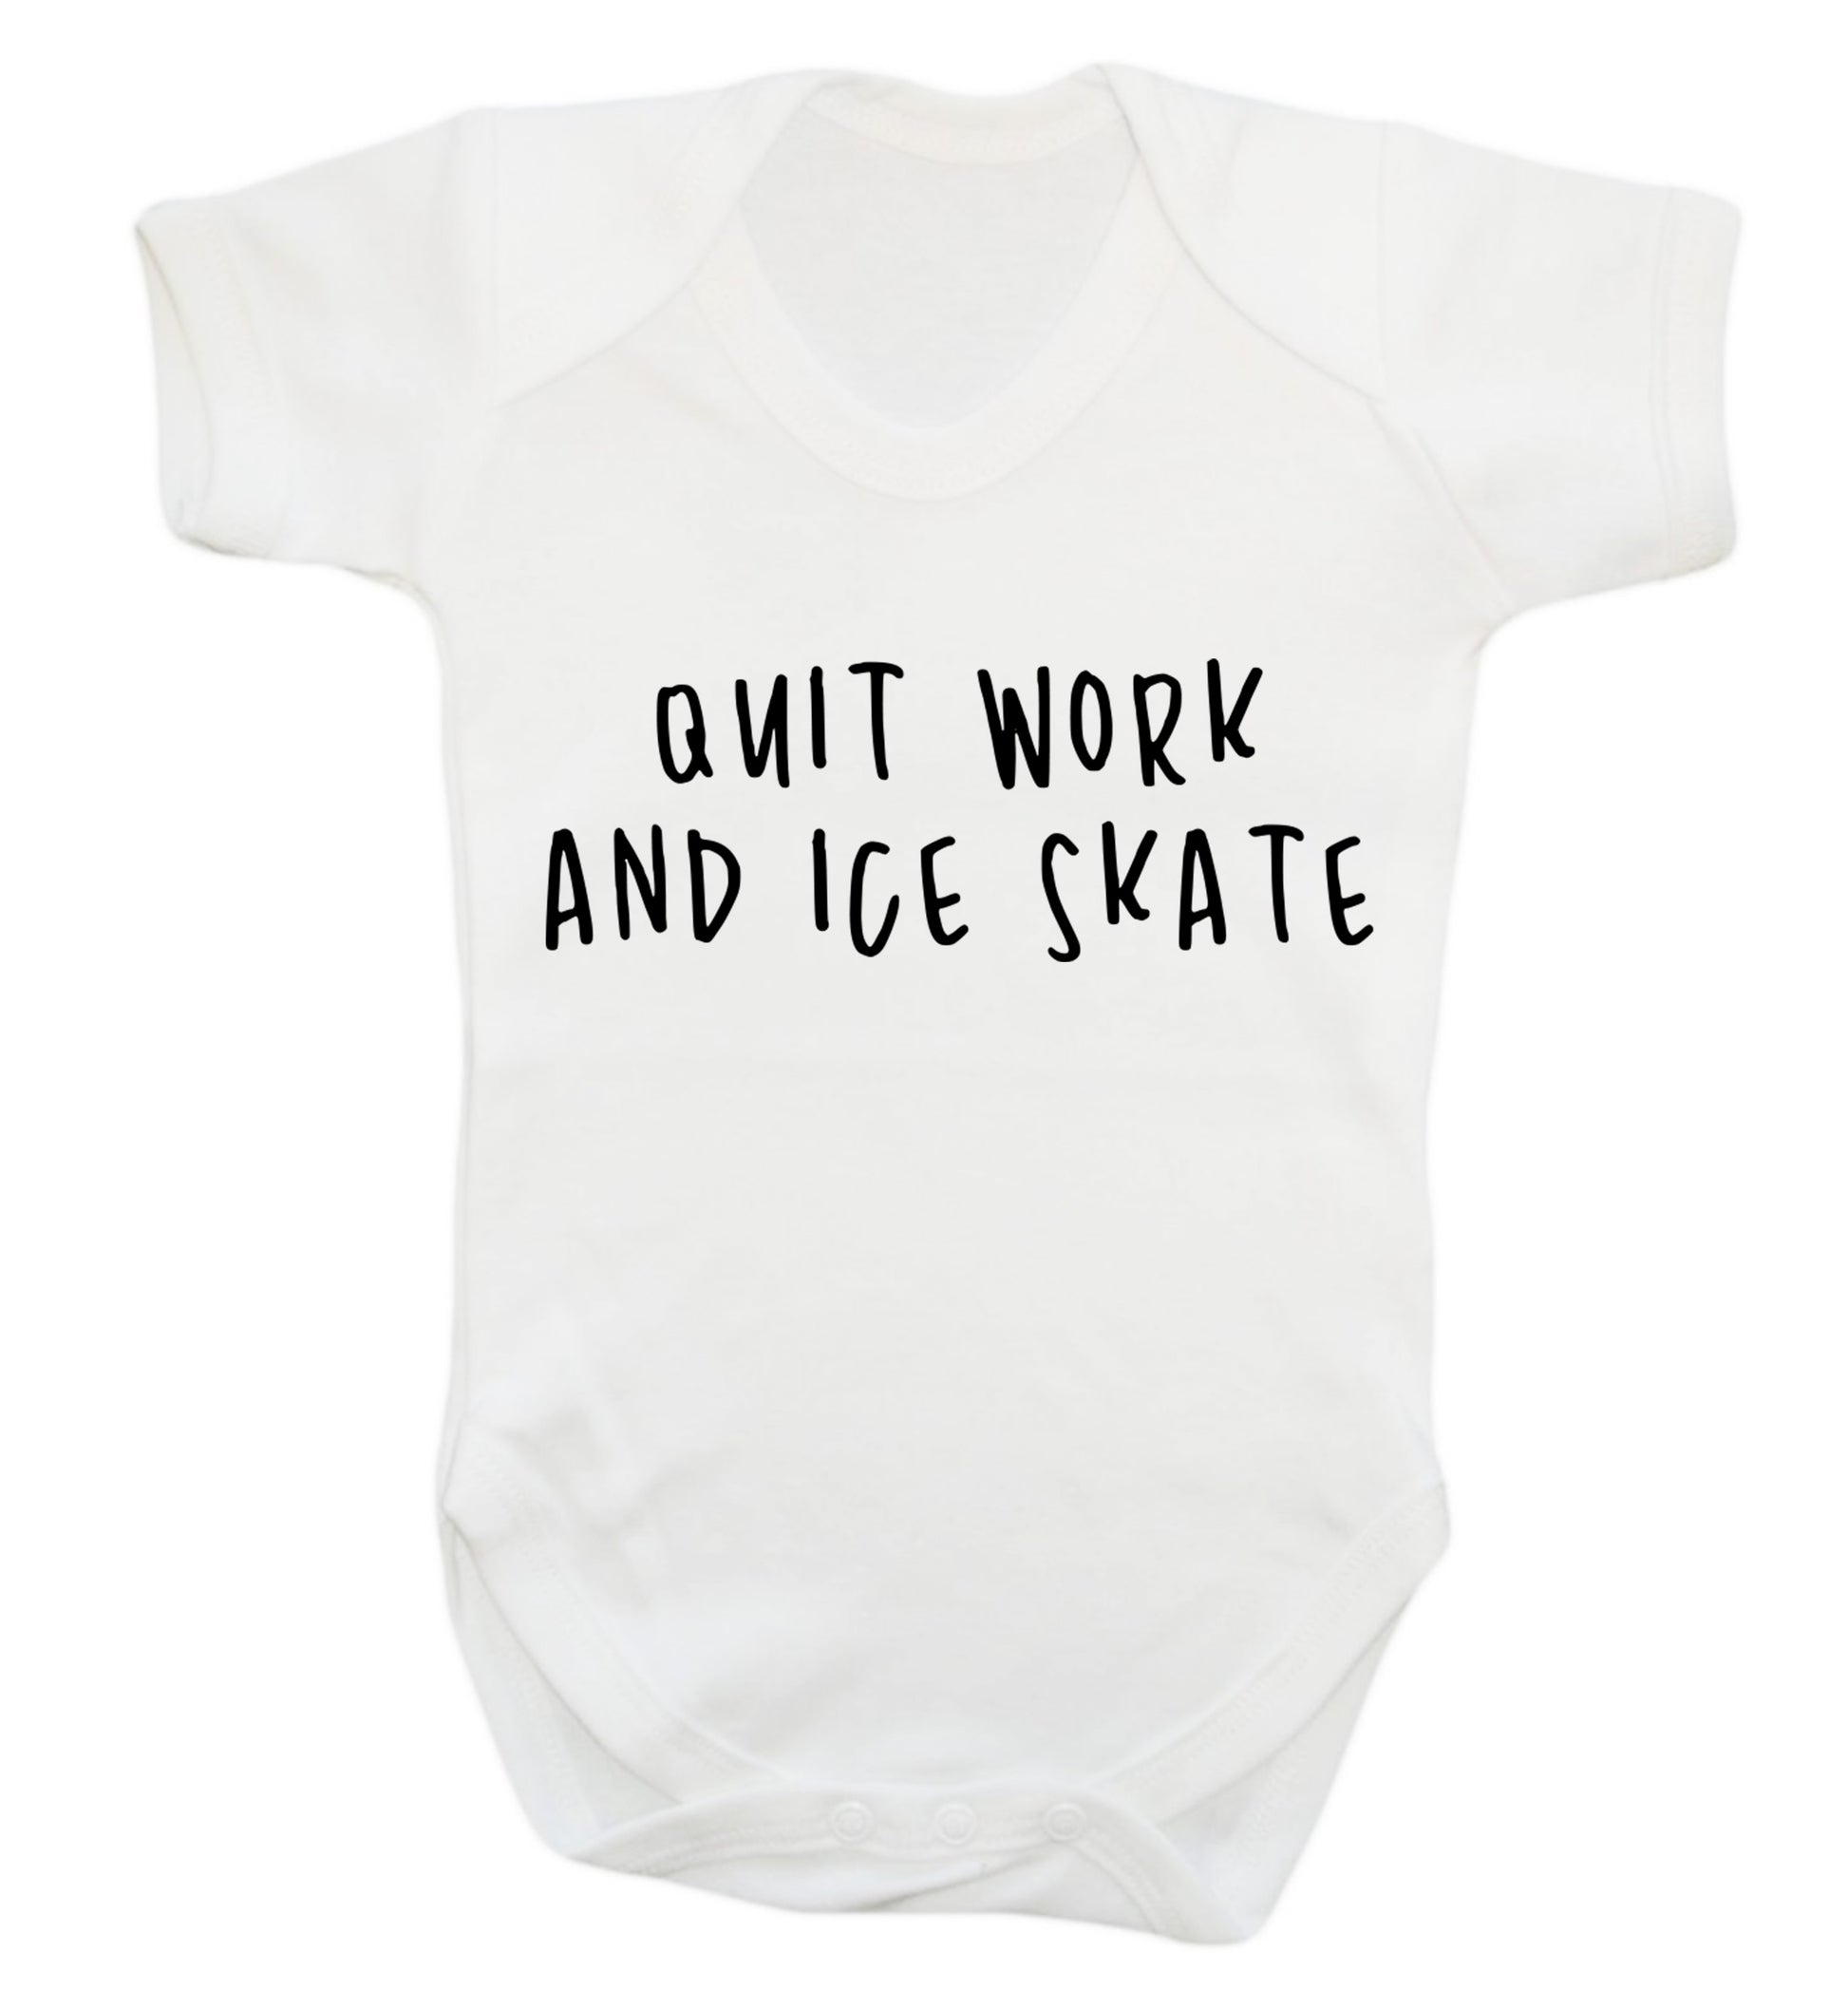 Quit work ice skate Baby Vest white 18-24 months